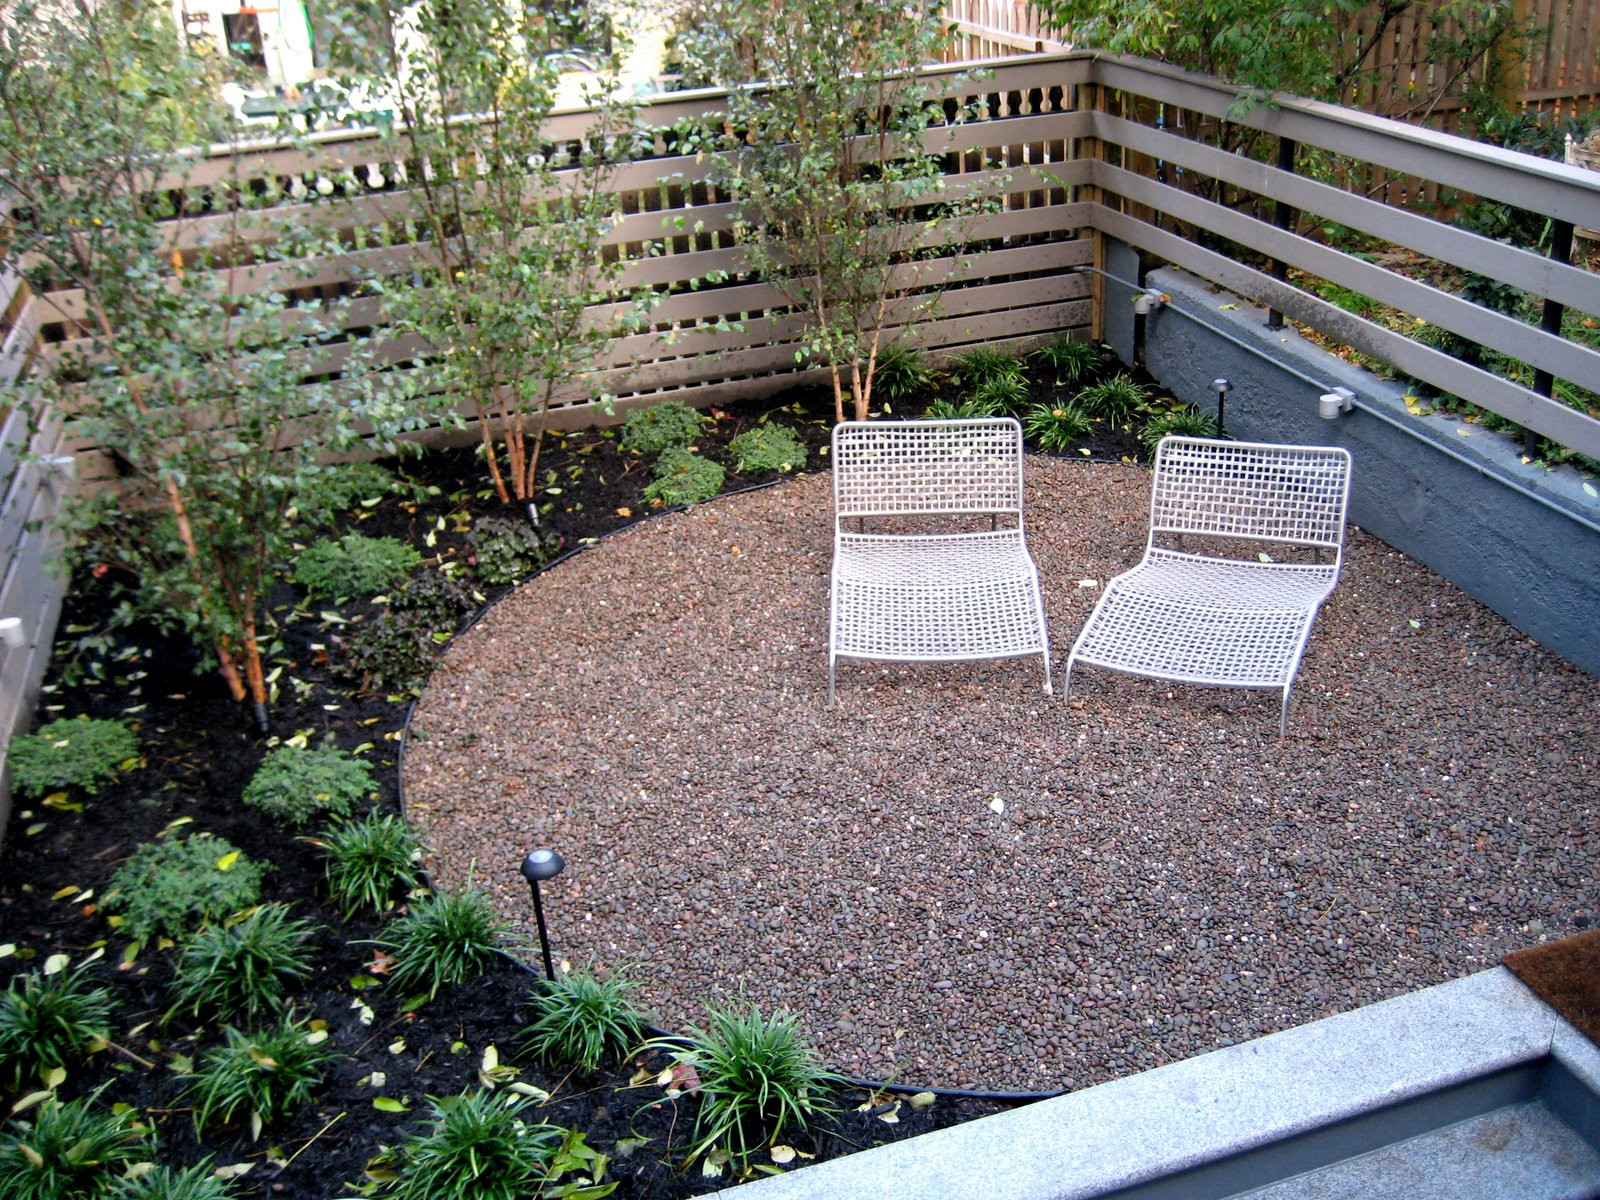 Backyard Gravel Ideas
 This Wonderful Backyard Patio Ideas With Gravel Will